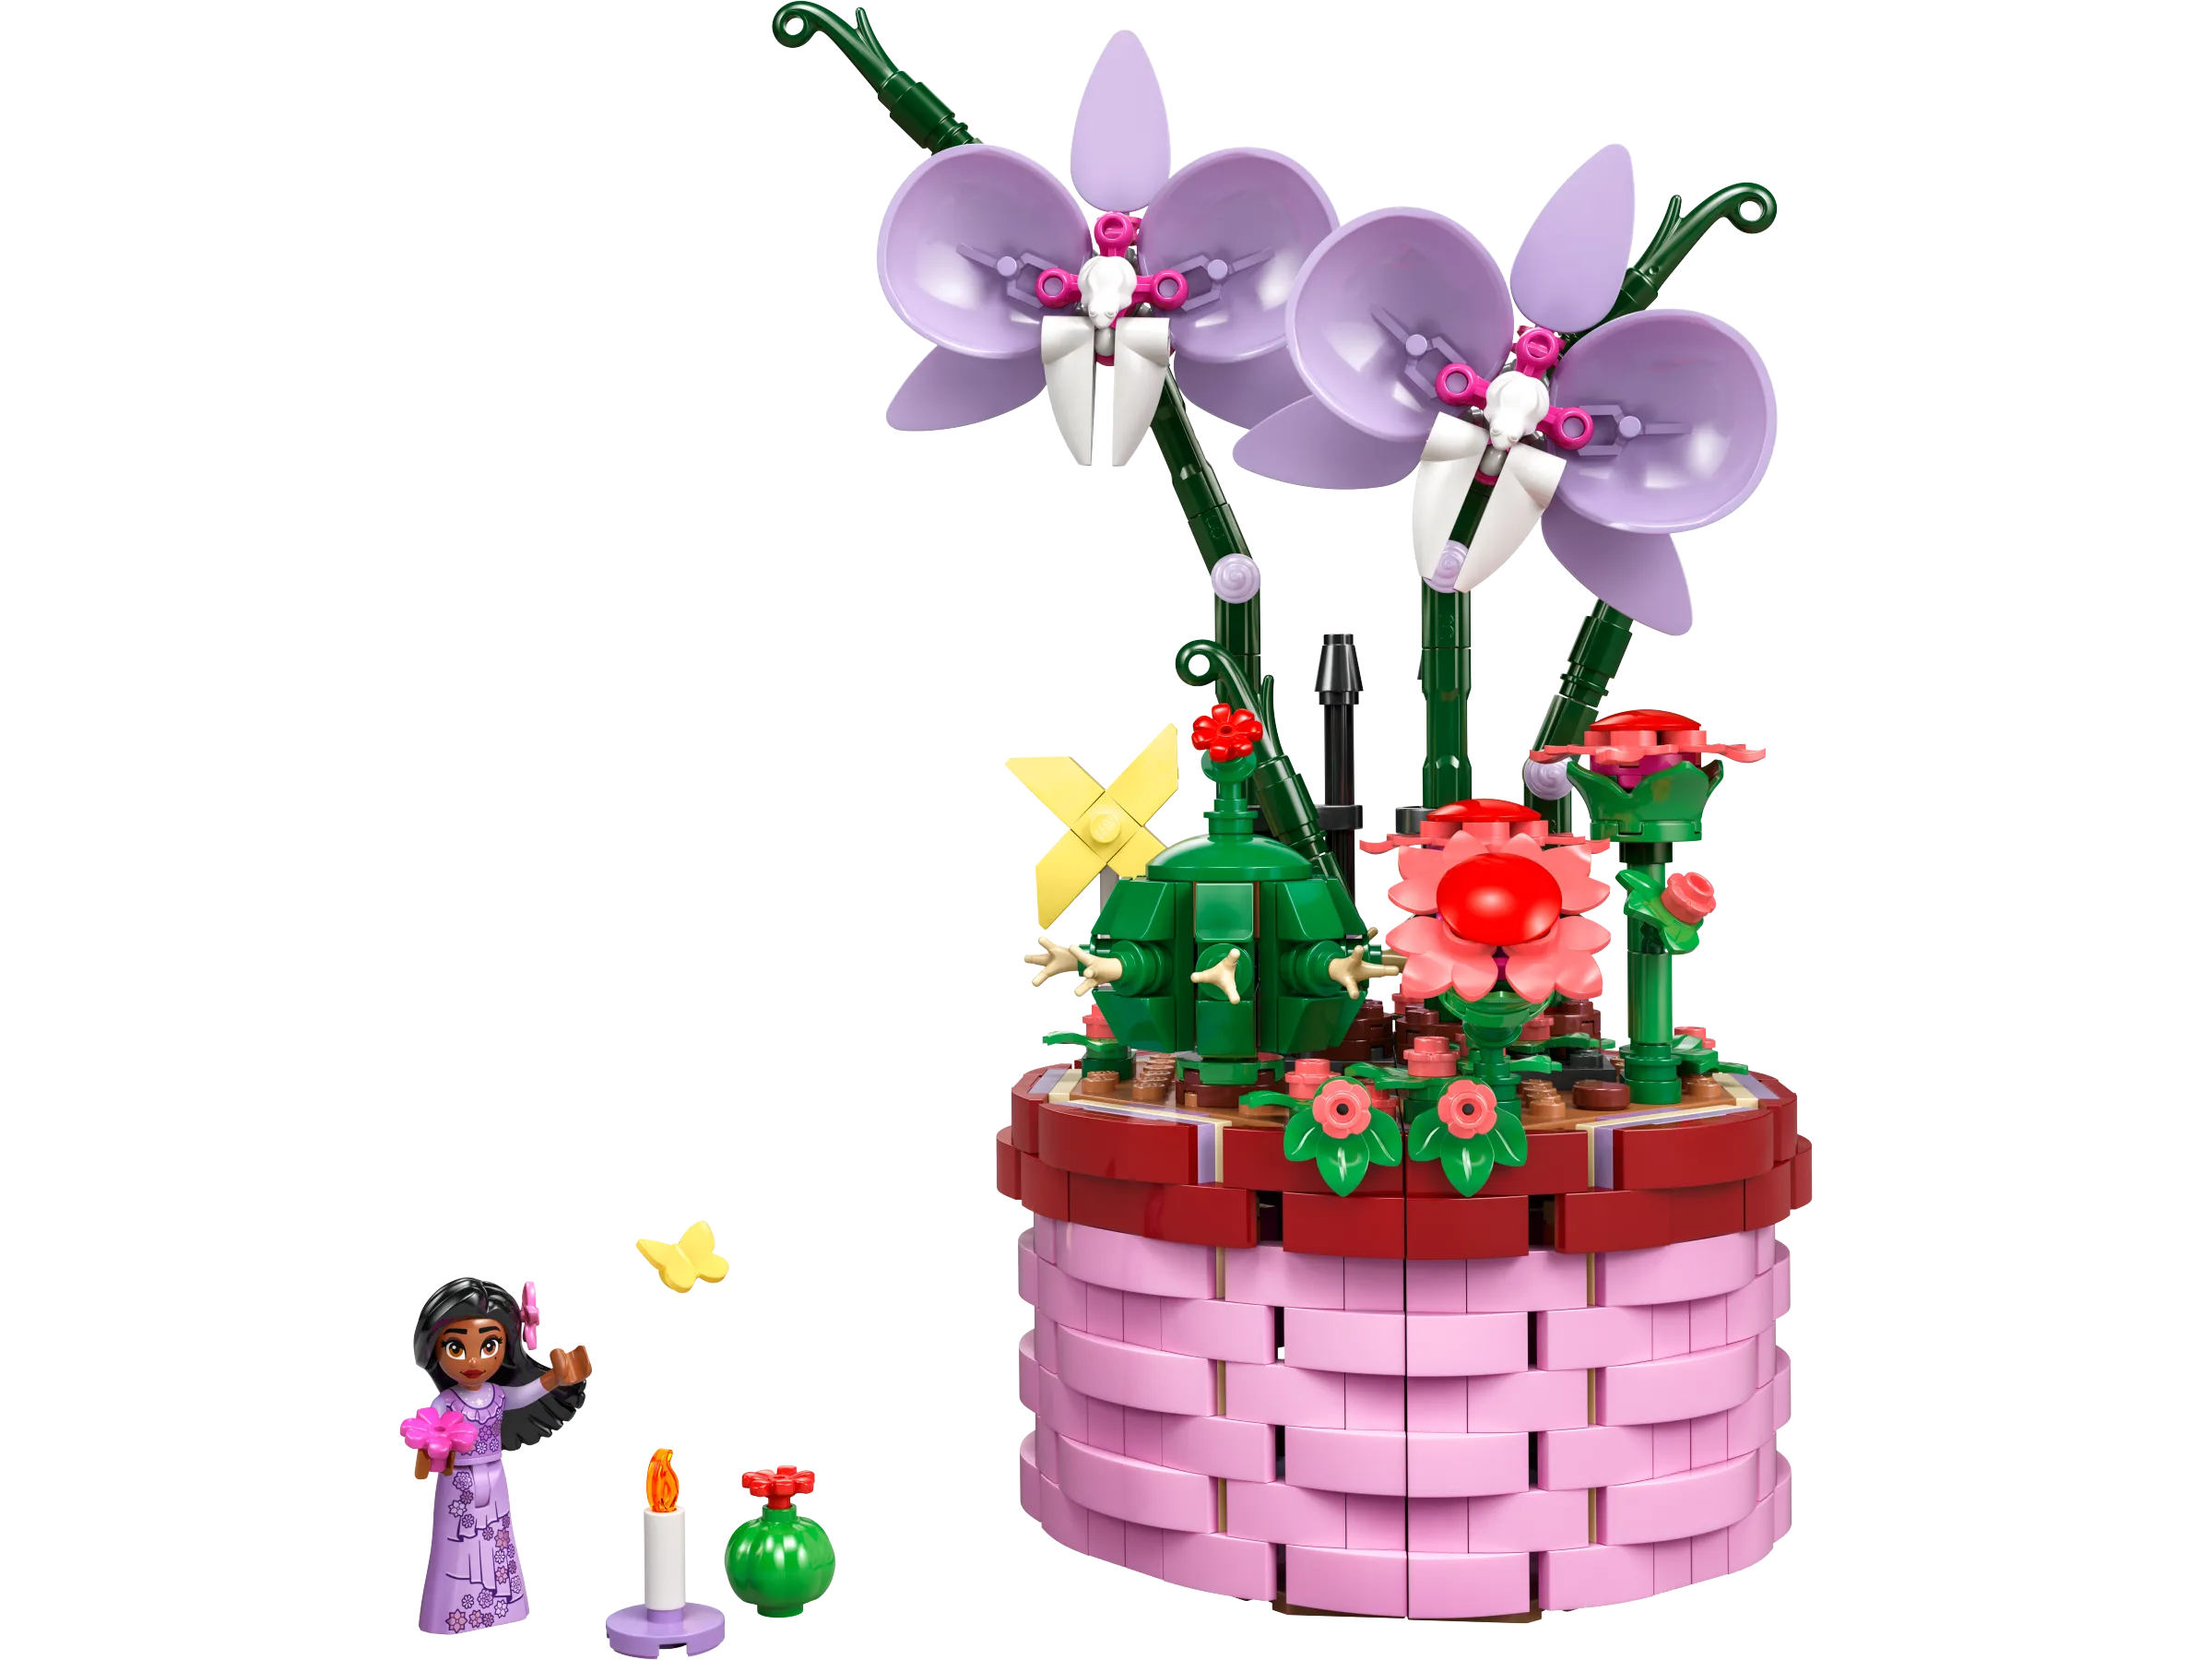 LEGO Disney 43249 Stitch Buildable Kids Toy Playset